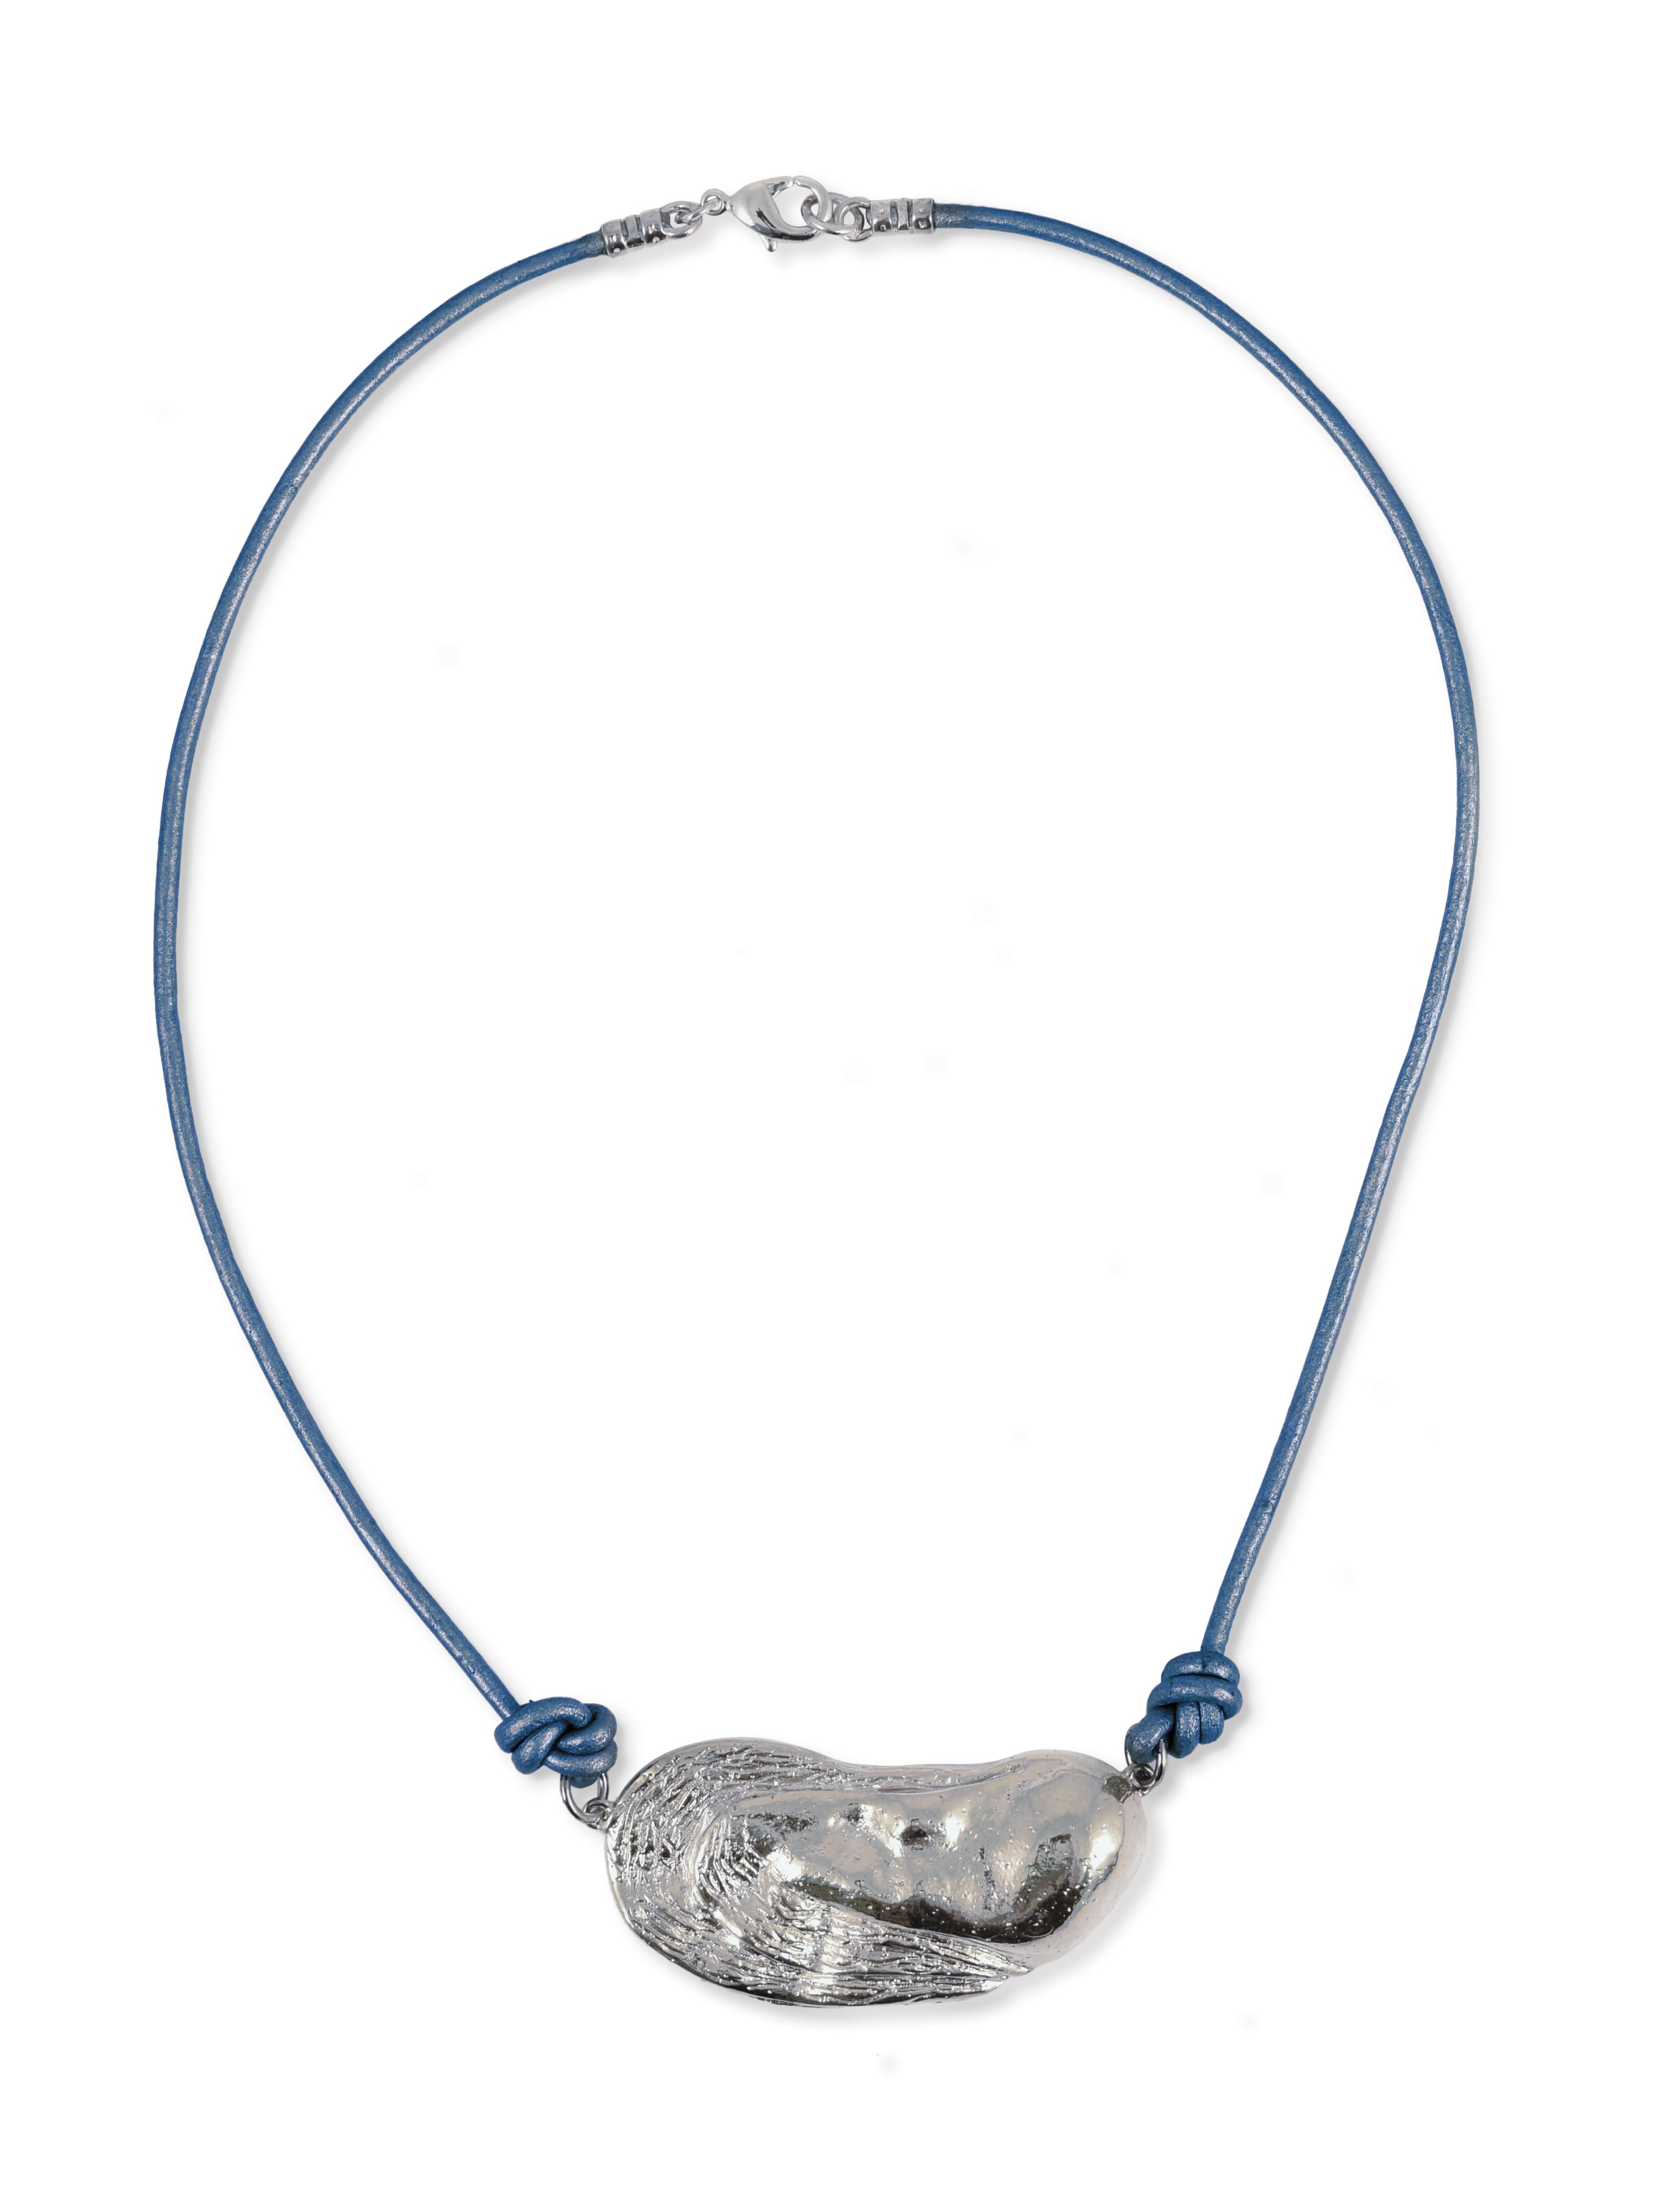 Castaway Oyster Necklace in Denim